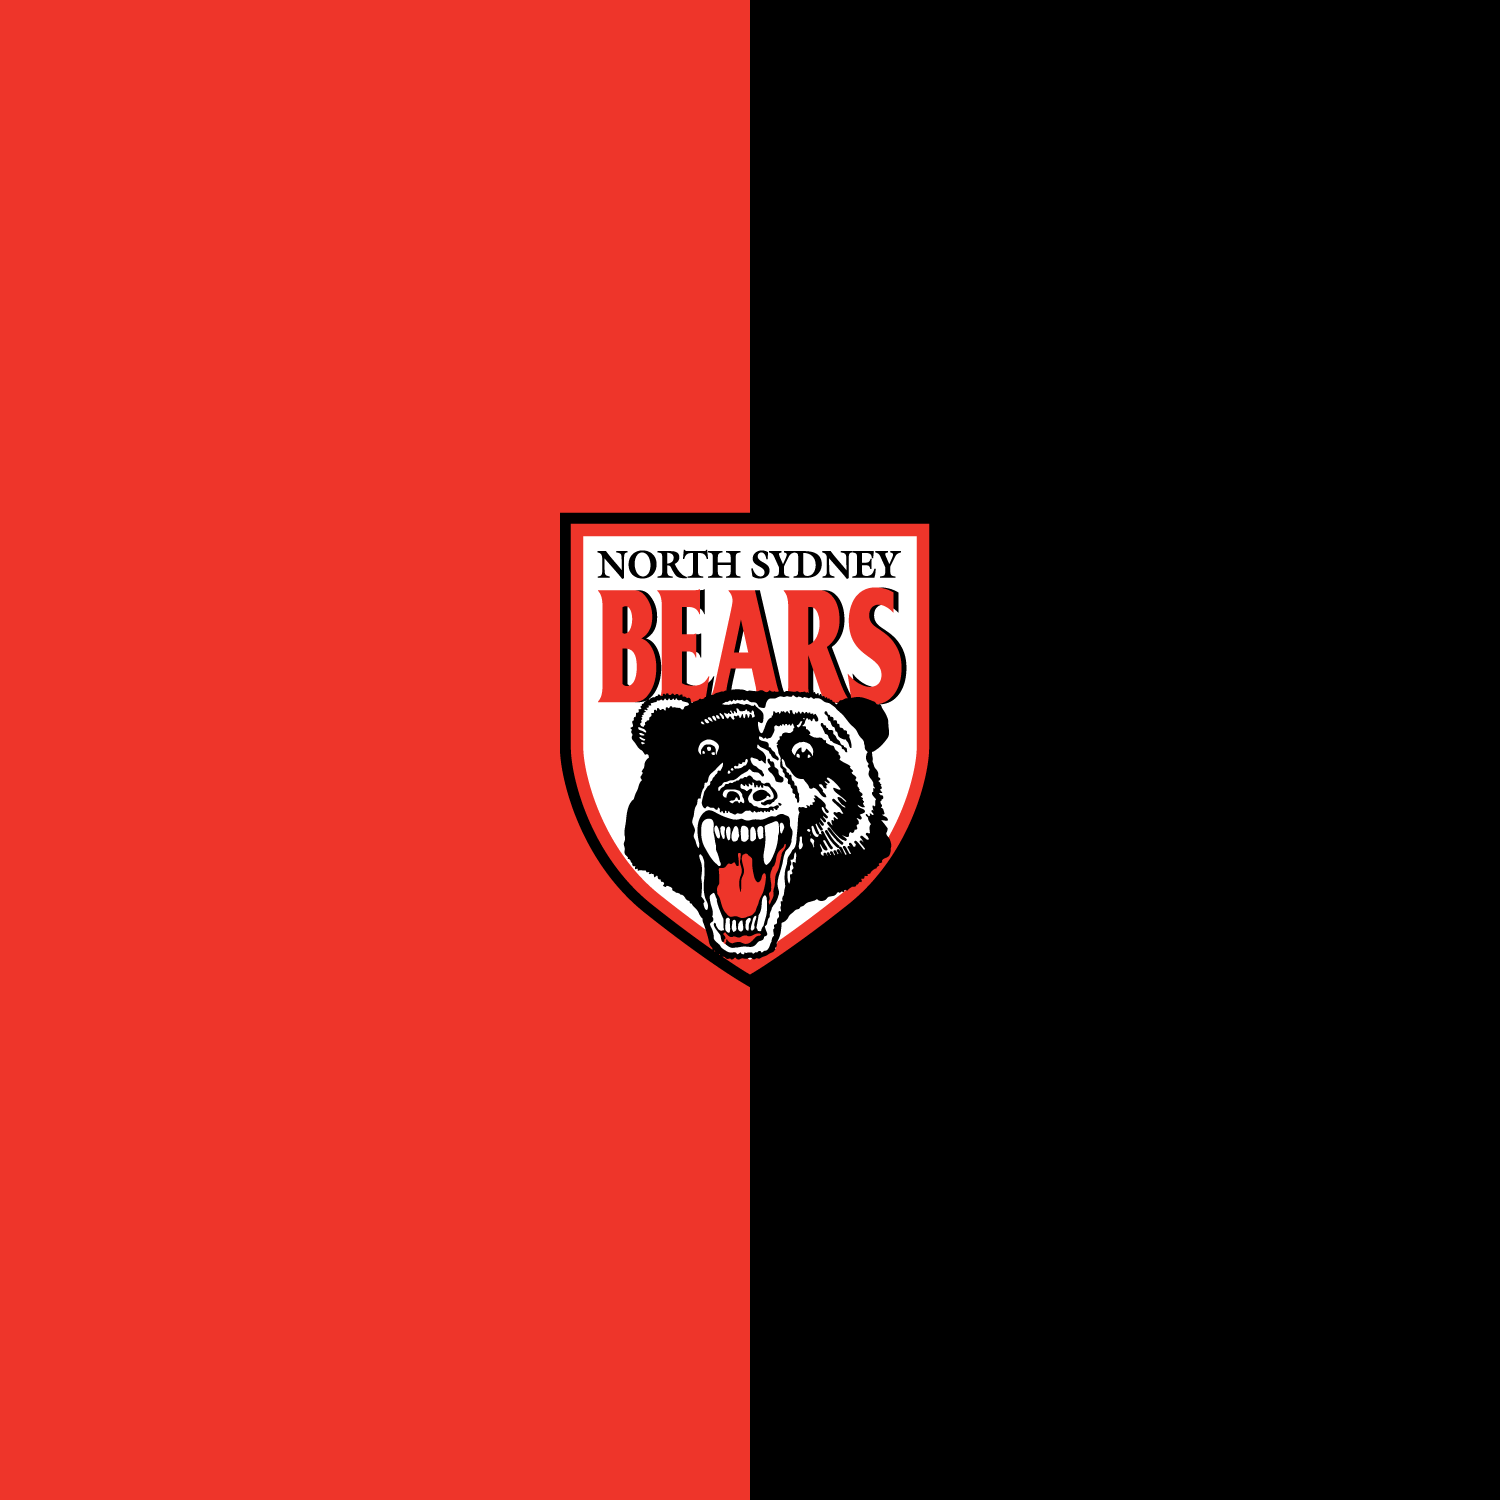 Red and Black Bears Logo - nsb-2016-website-bears-logo-red-black-bg-1500px - North Sydney Bears